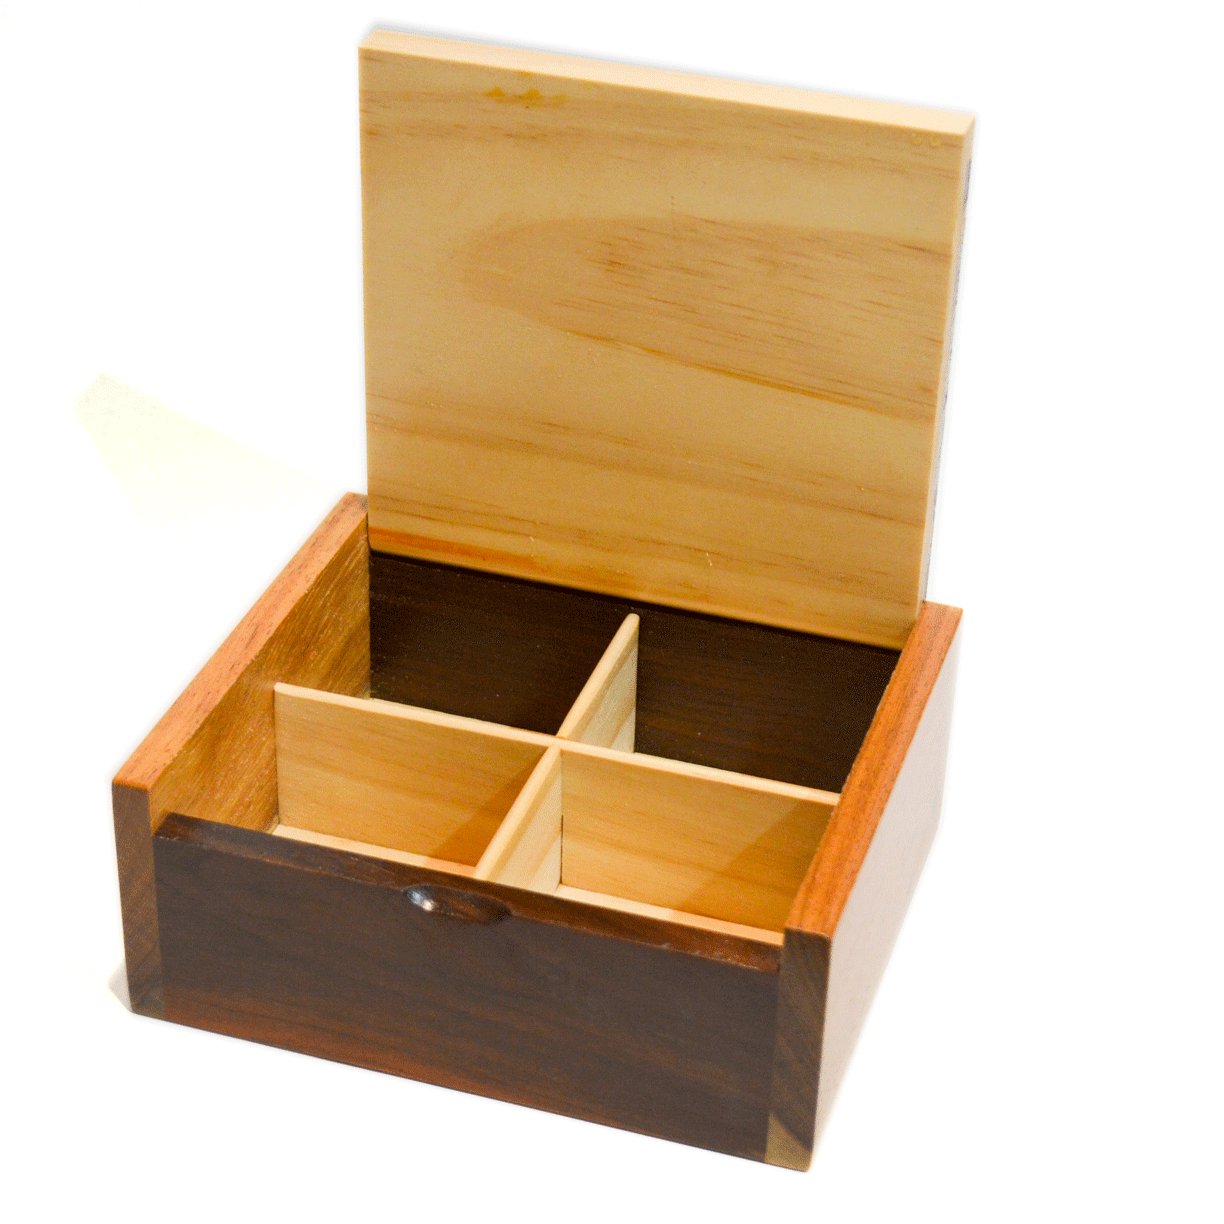 Wooden tea box 4 divisions - wood design resin